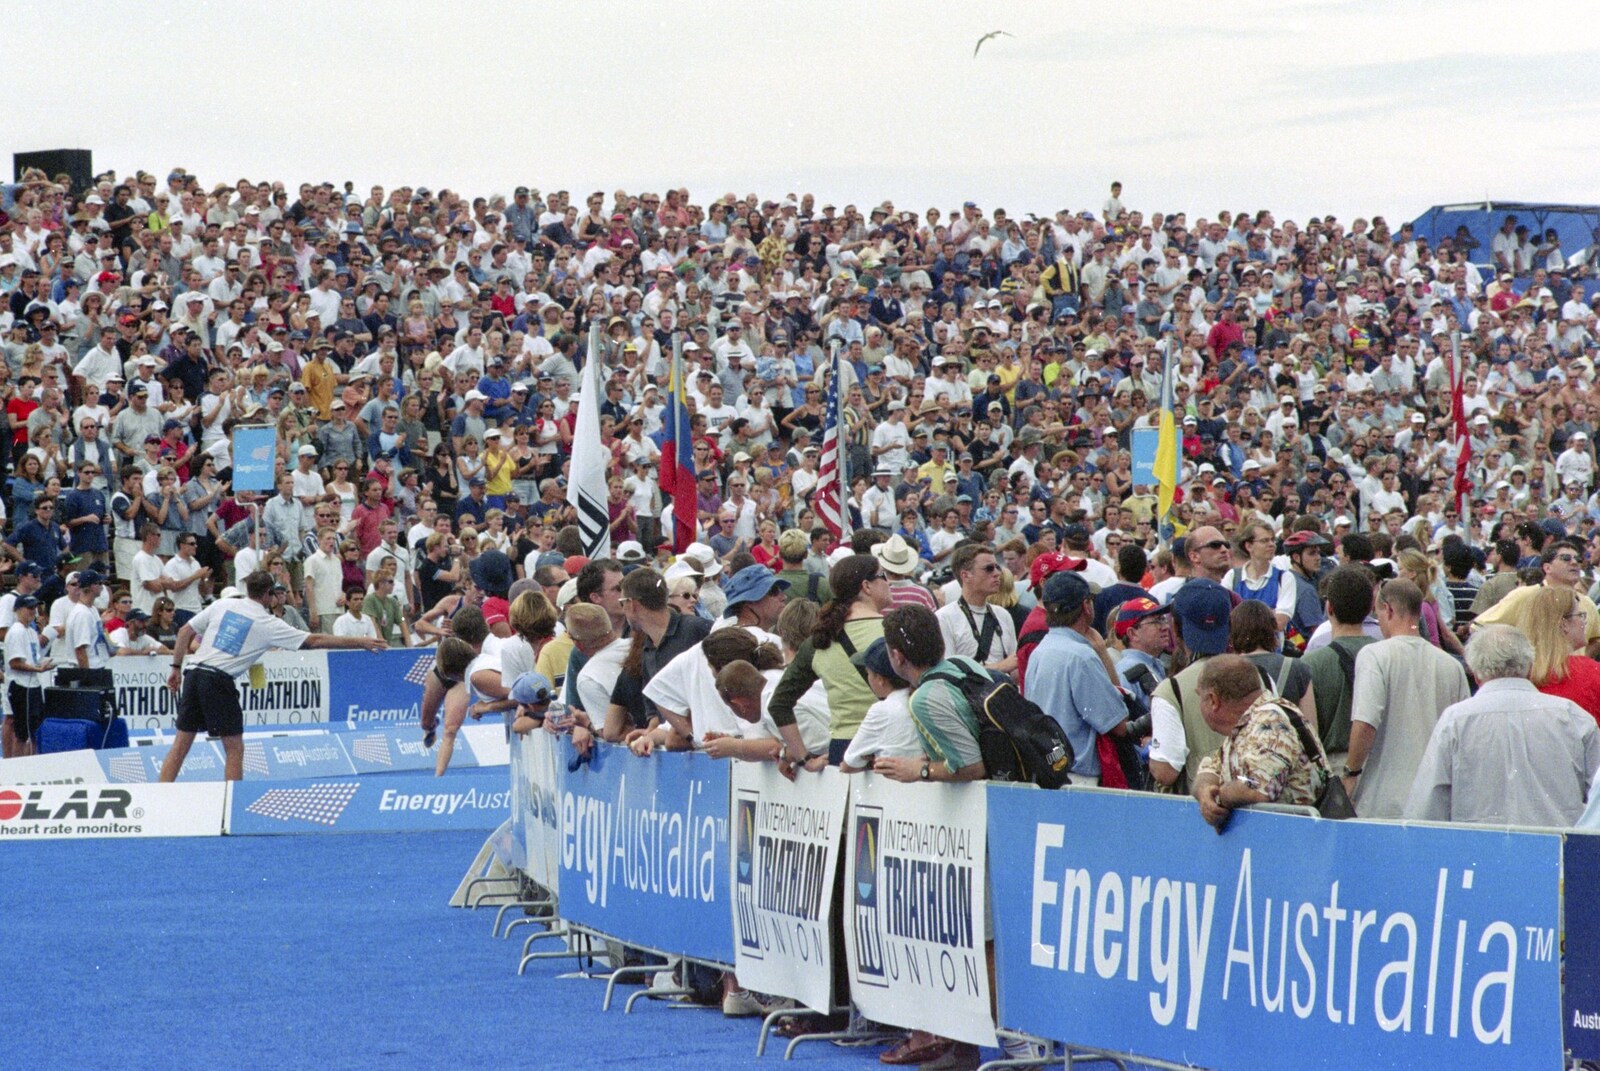 There's a big turn out from Sydney Triathlon, Sydney, Australia - 16th April 2000